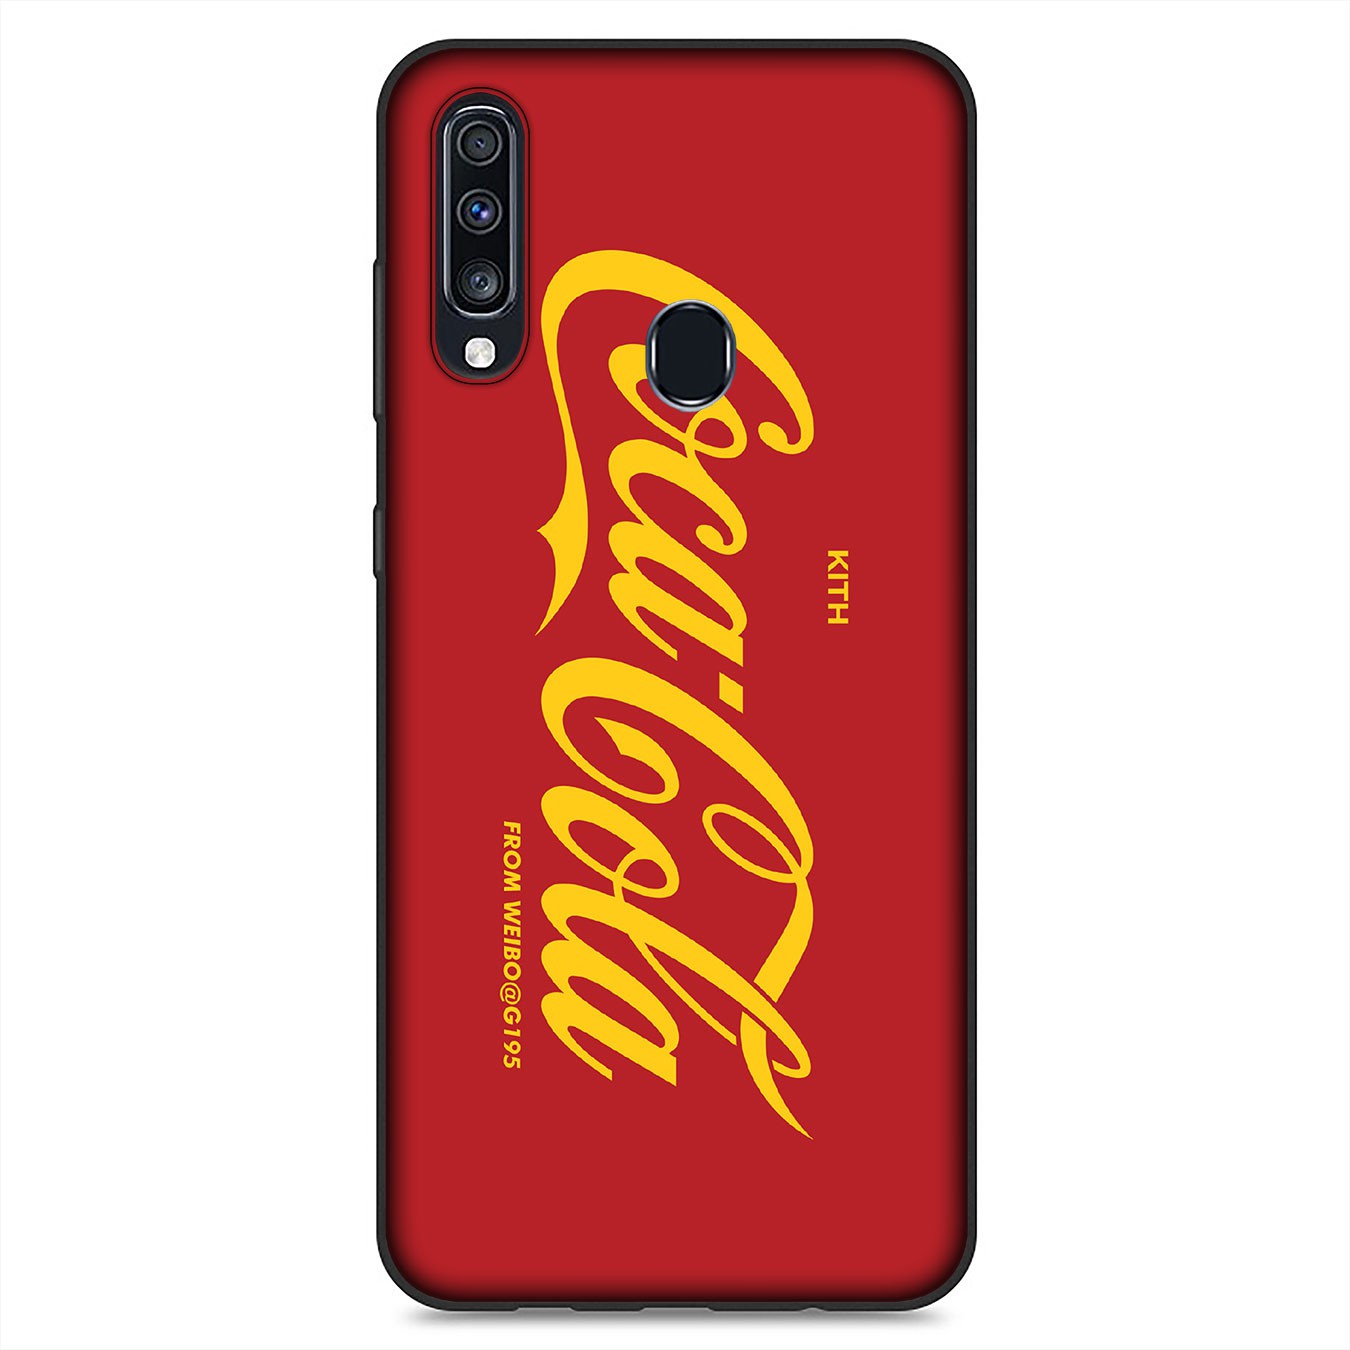 Samsung Galaxy S21 Ultra S8 Plus F62 M62 A2 A32 A52 A72 S21+ S8+ S21Plus Casing Soft Silicone Phone Case Coca Cola Coke red logo Cover